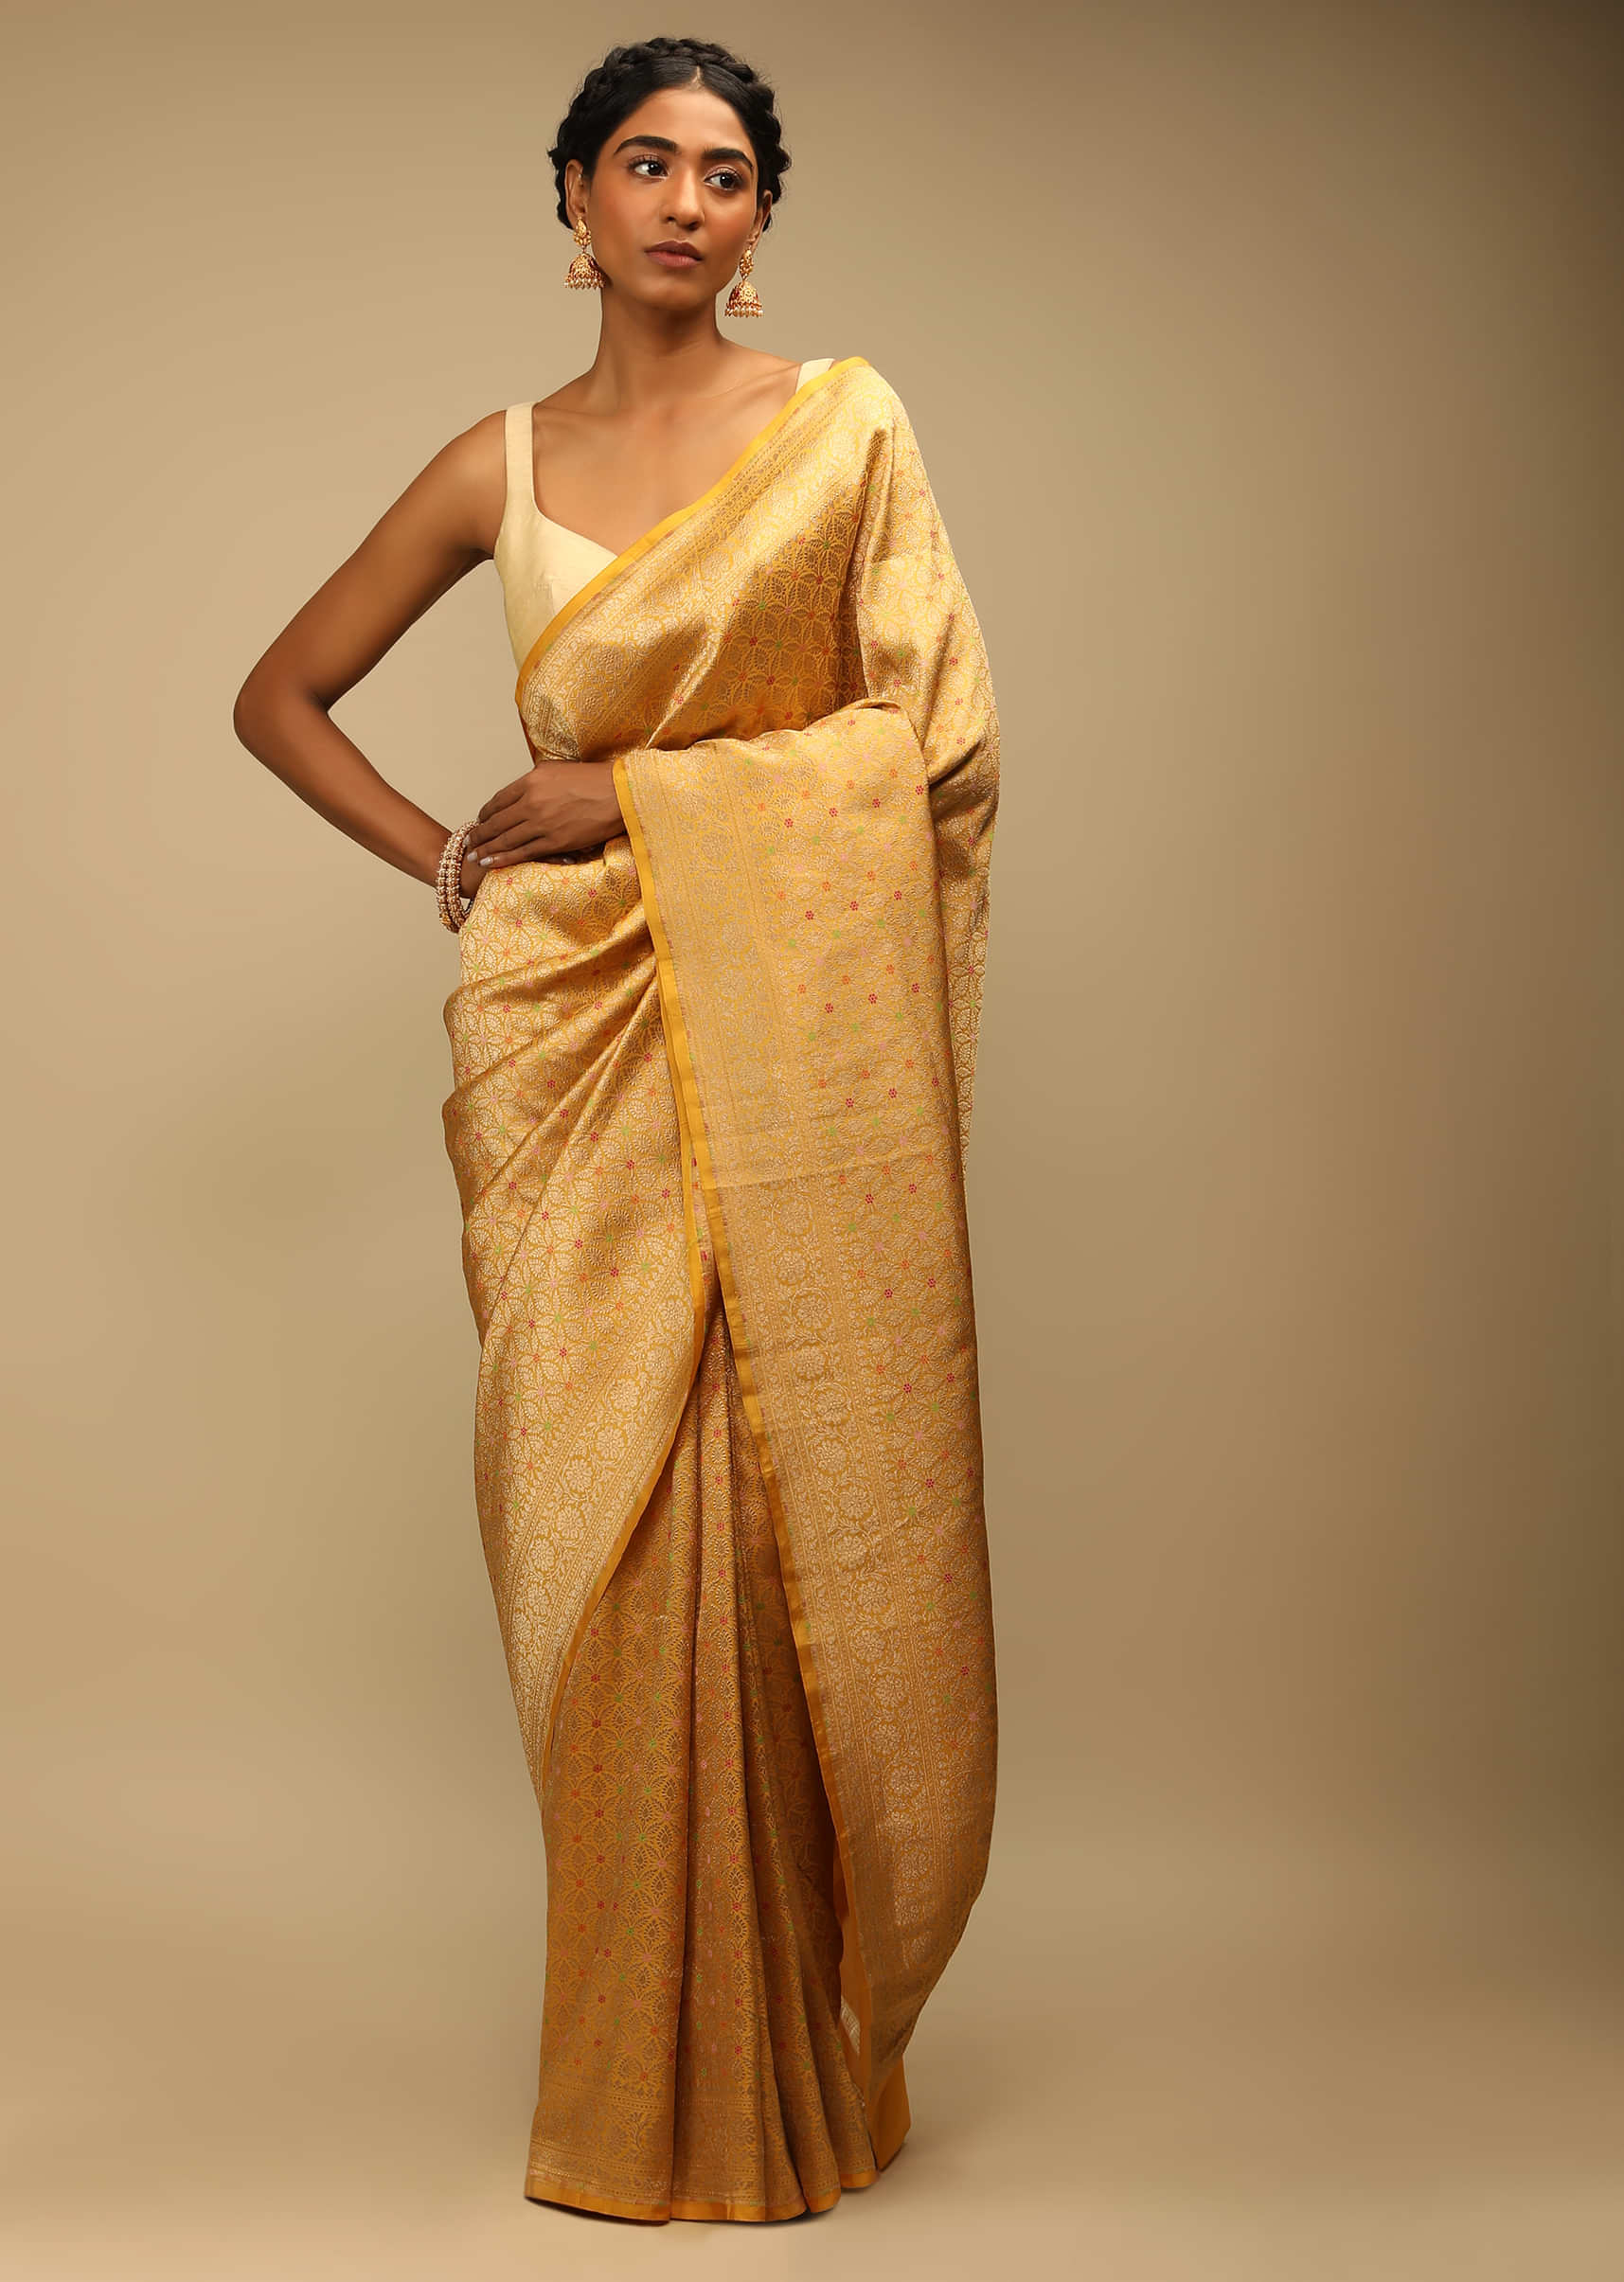 Creative Golden Colored Designer Saree, Bollywood Saree latest collections  | Bollywood Sarees